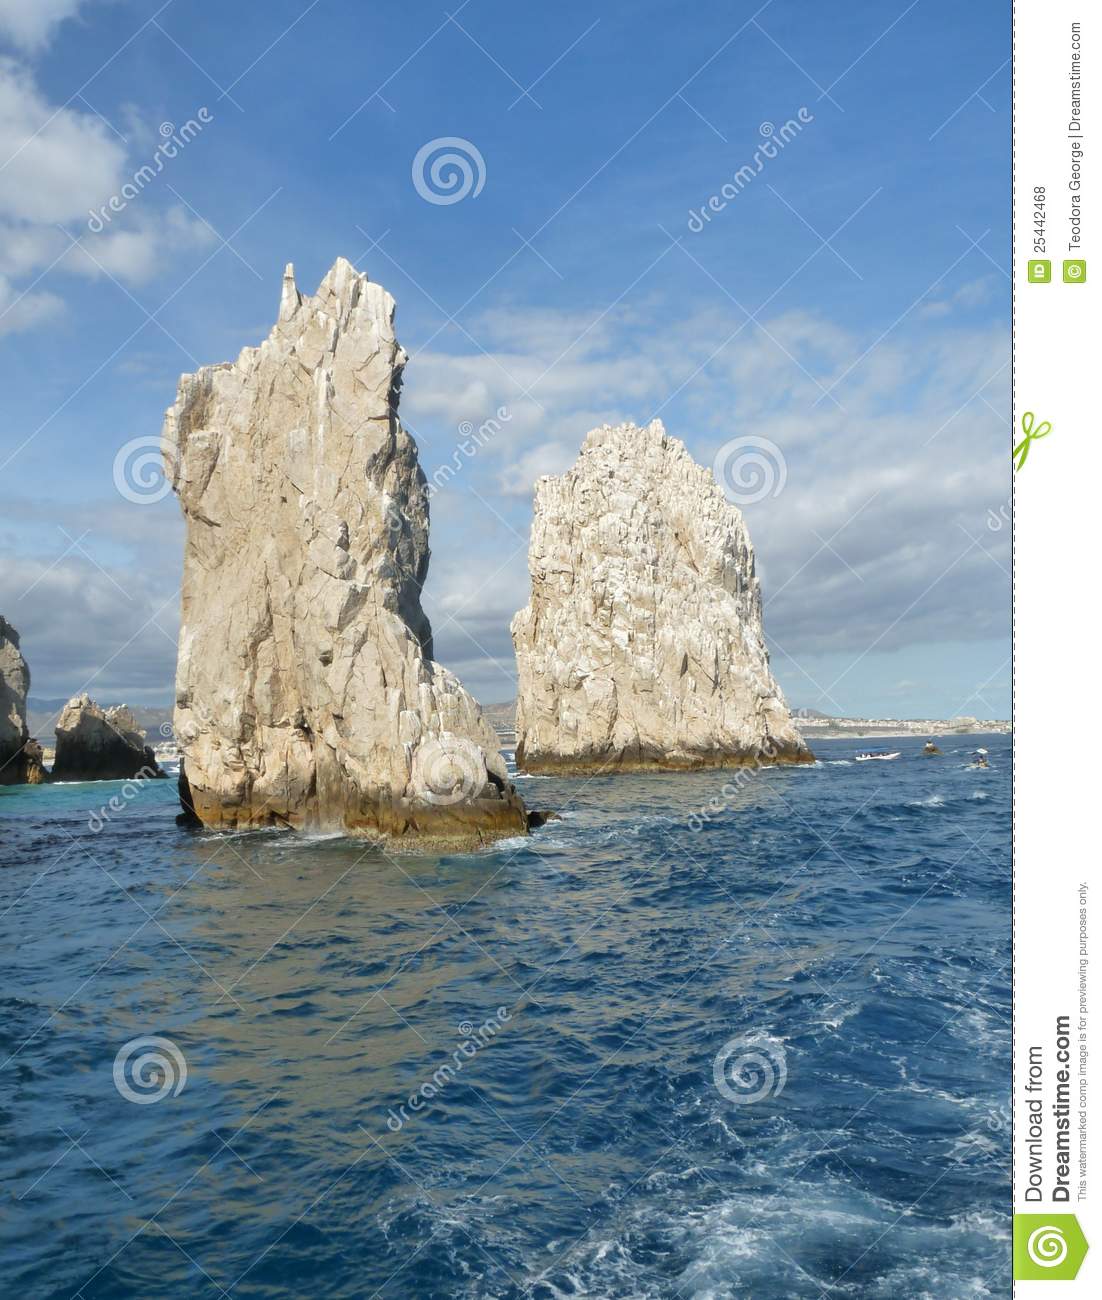 Giants Rock Outcropping In The Blue Ocean At Cabo San Lucas Mexico 